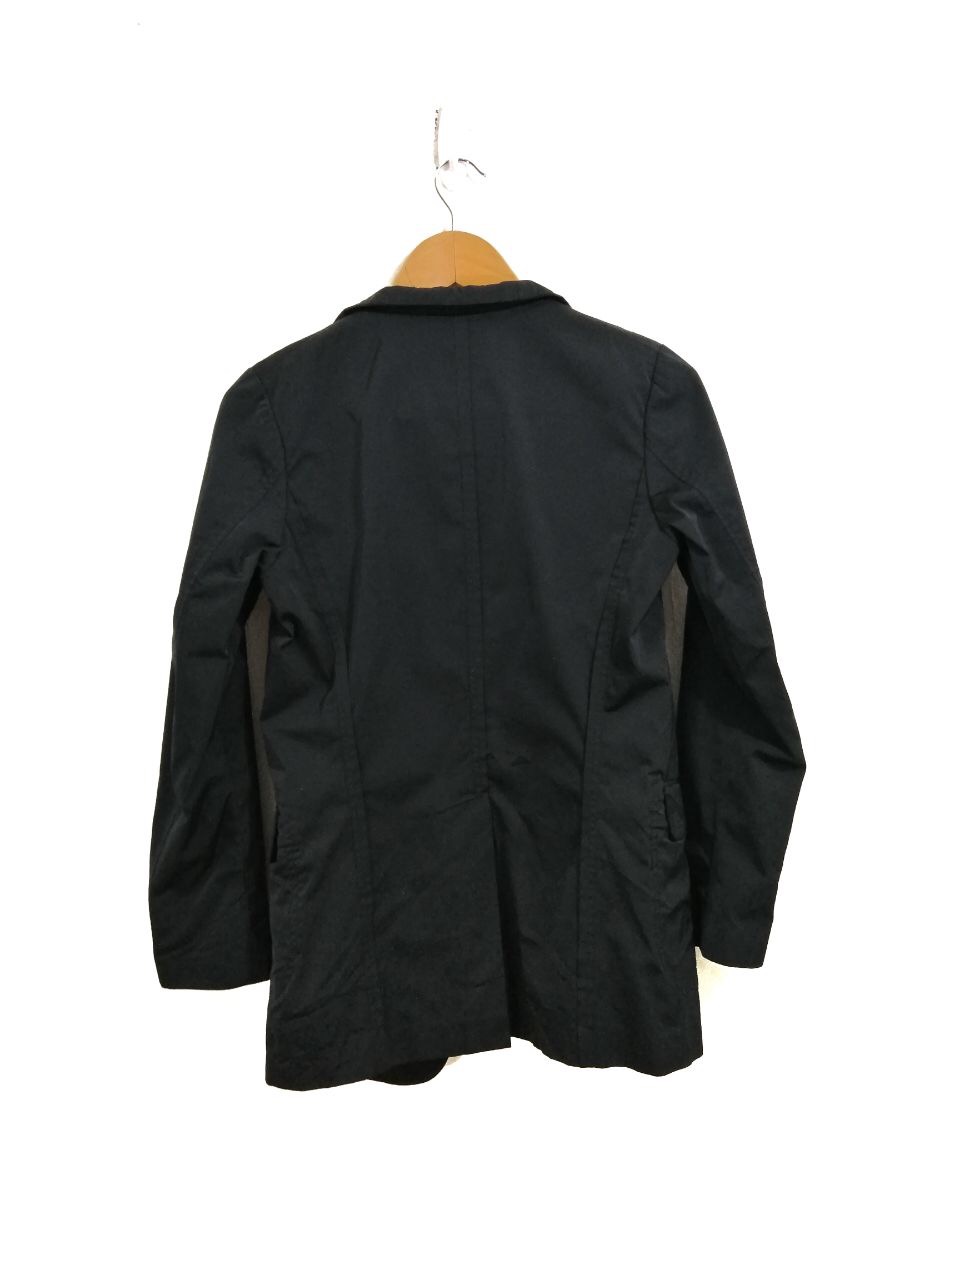 Jil Sander X Uniqlo Style Coat/Jacket Design 19 - 2